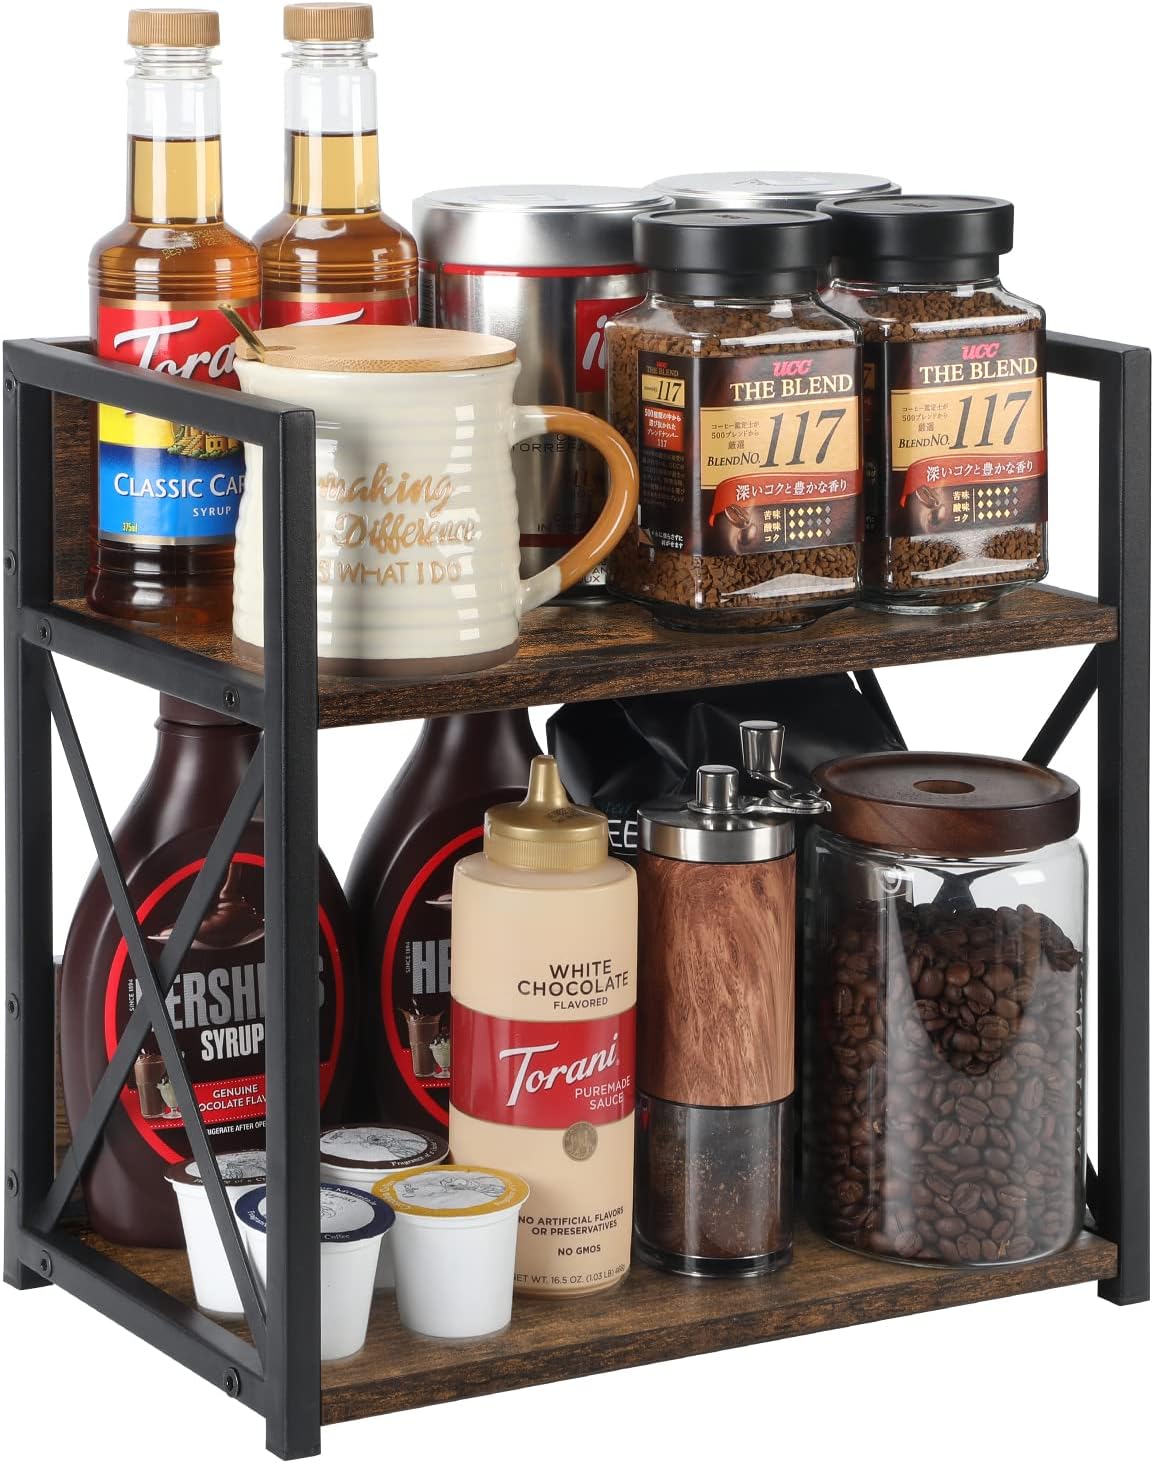 Coffee Bar Accessories Organizer, Spice Rack Organizer, Wooden Kitchen Counter Shelf, 2 Tier Coffee Organizer Station for Countertop, Coffee Condiment Rack for Mugs, Cups, Cream, Syrup (Medium)